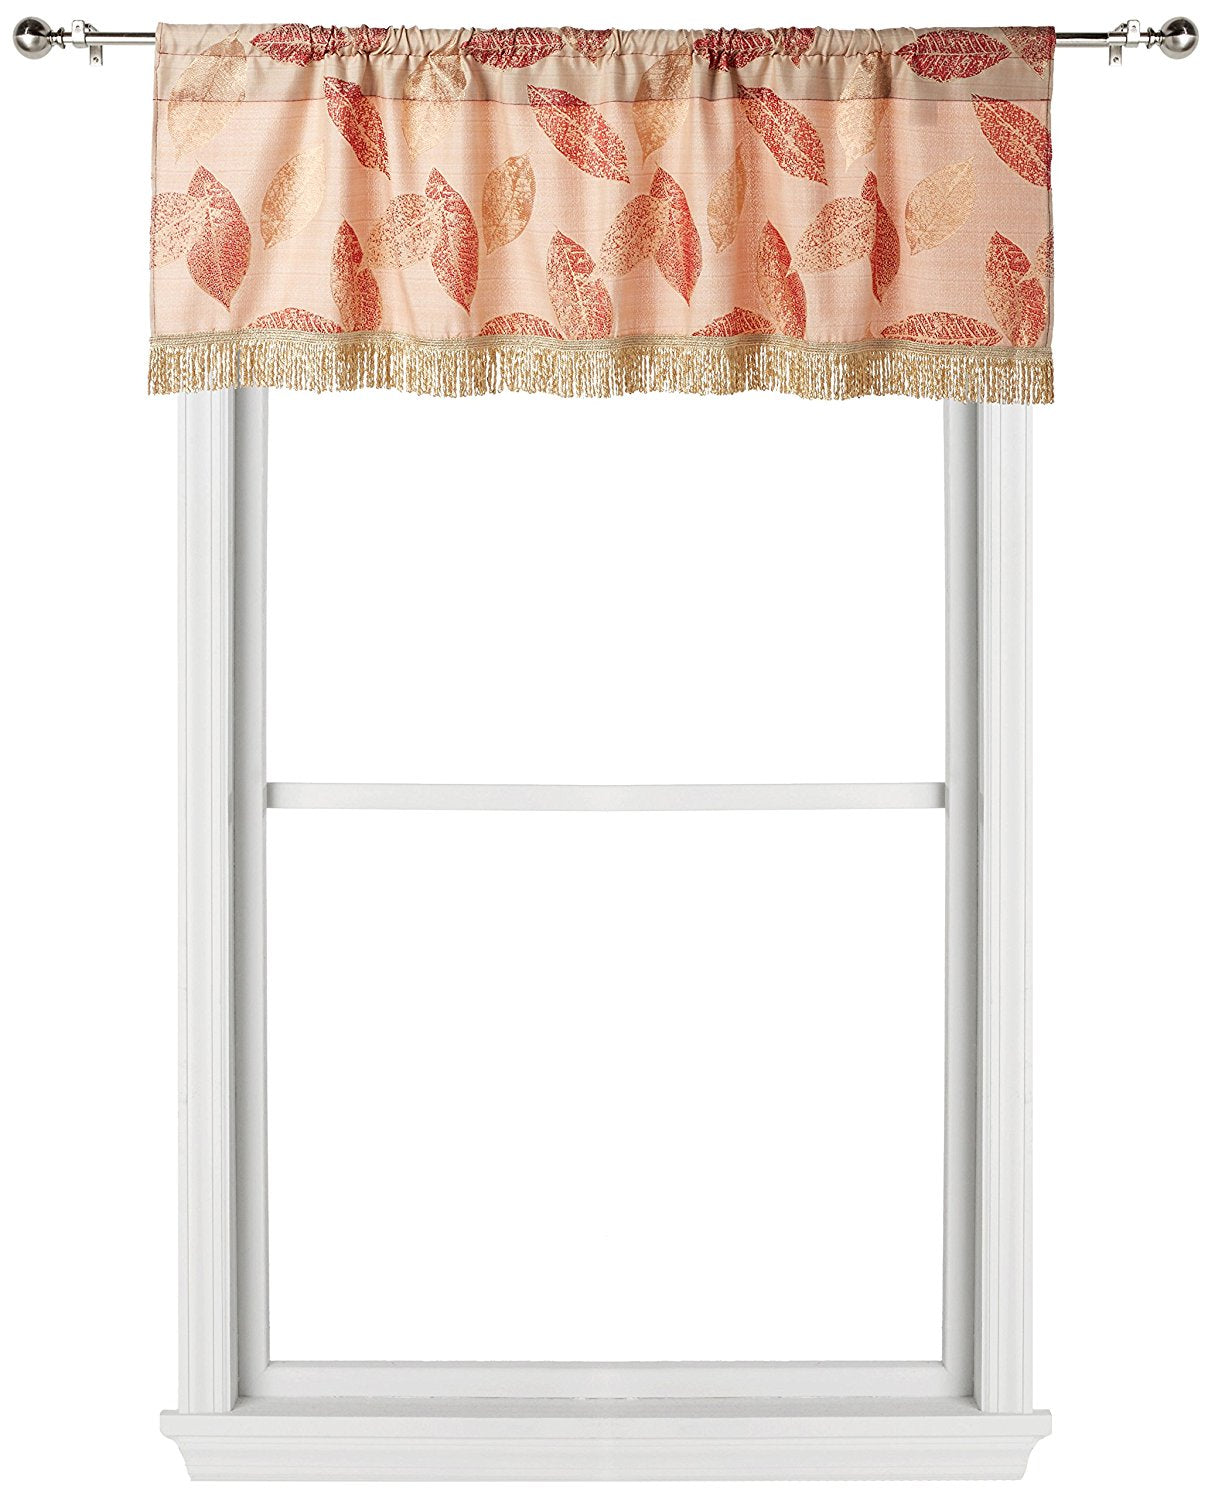 Luxurious Milano Arts Decorative Window Treatment Rod Pocket Curtain Straight Valance